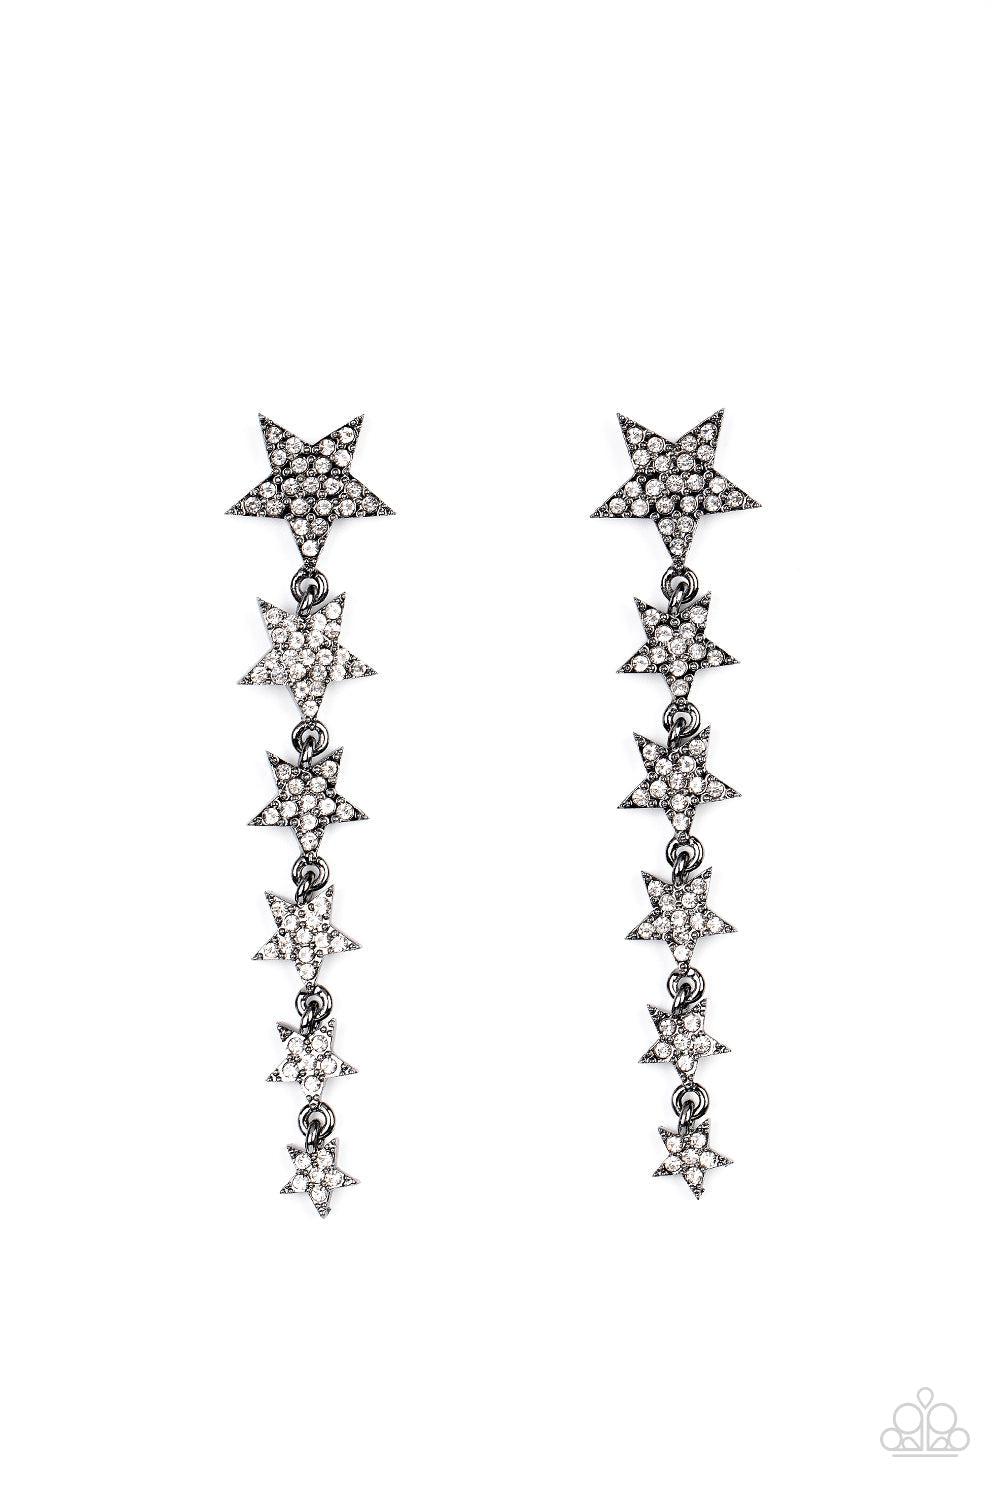 Americana Attitude Black &amp; White Rhinestone Star Earrings - Paparazzi Accessories- lightbox - CarasShop.com - $5 Jewelry by Cara Jewels